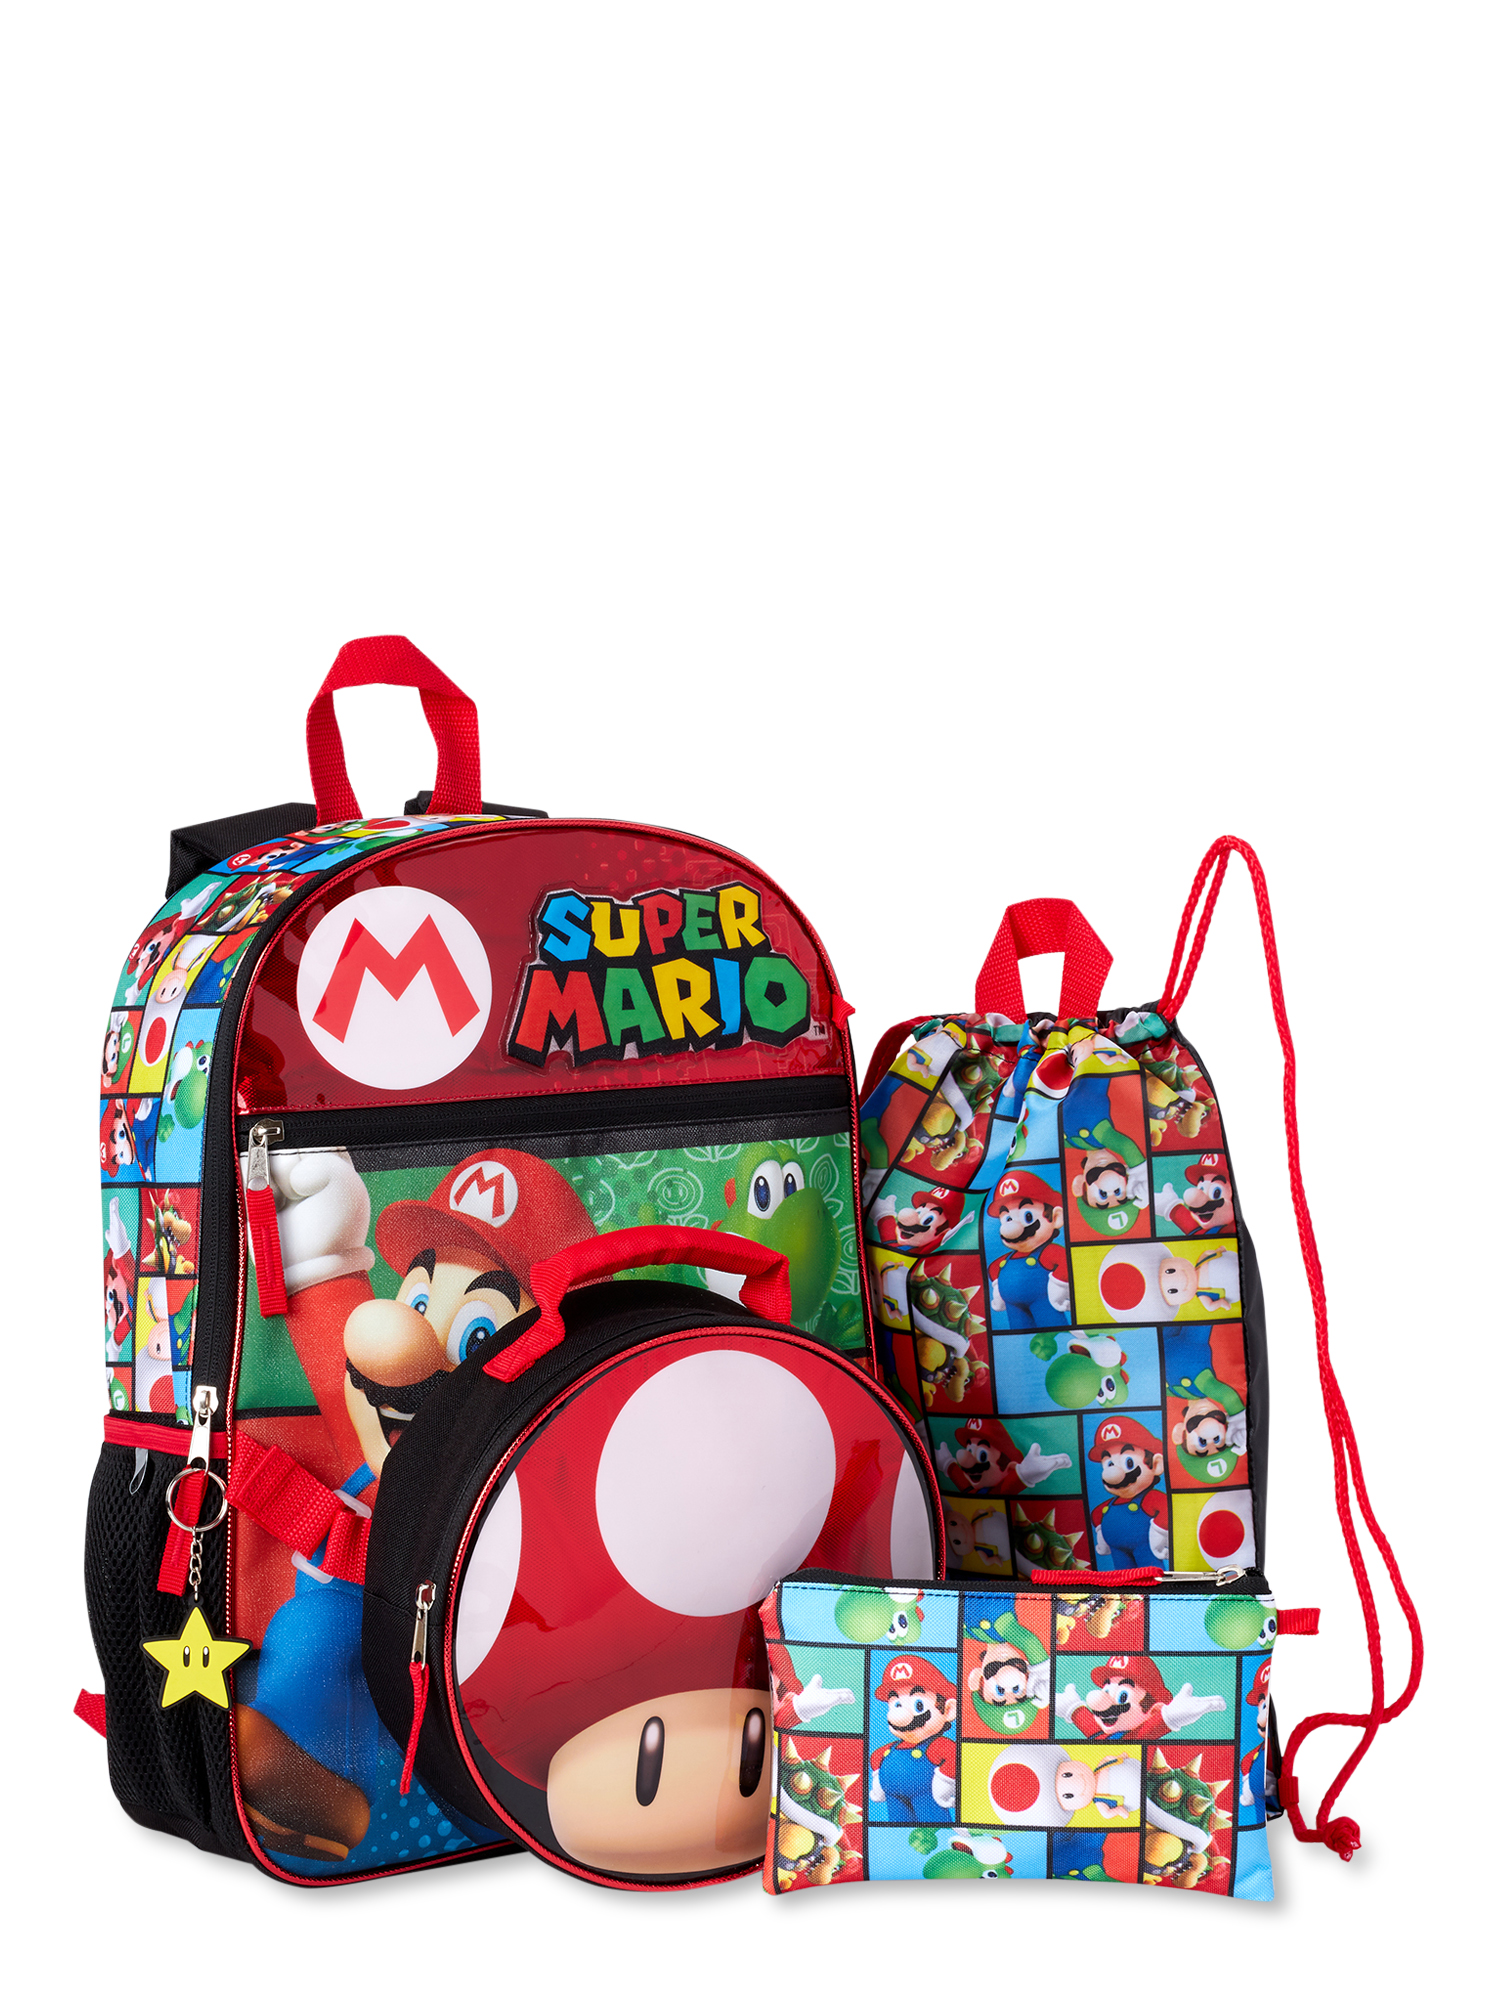 Super Mario 5 Piece Backpack S...